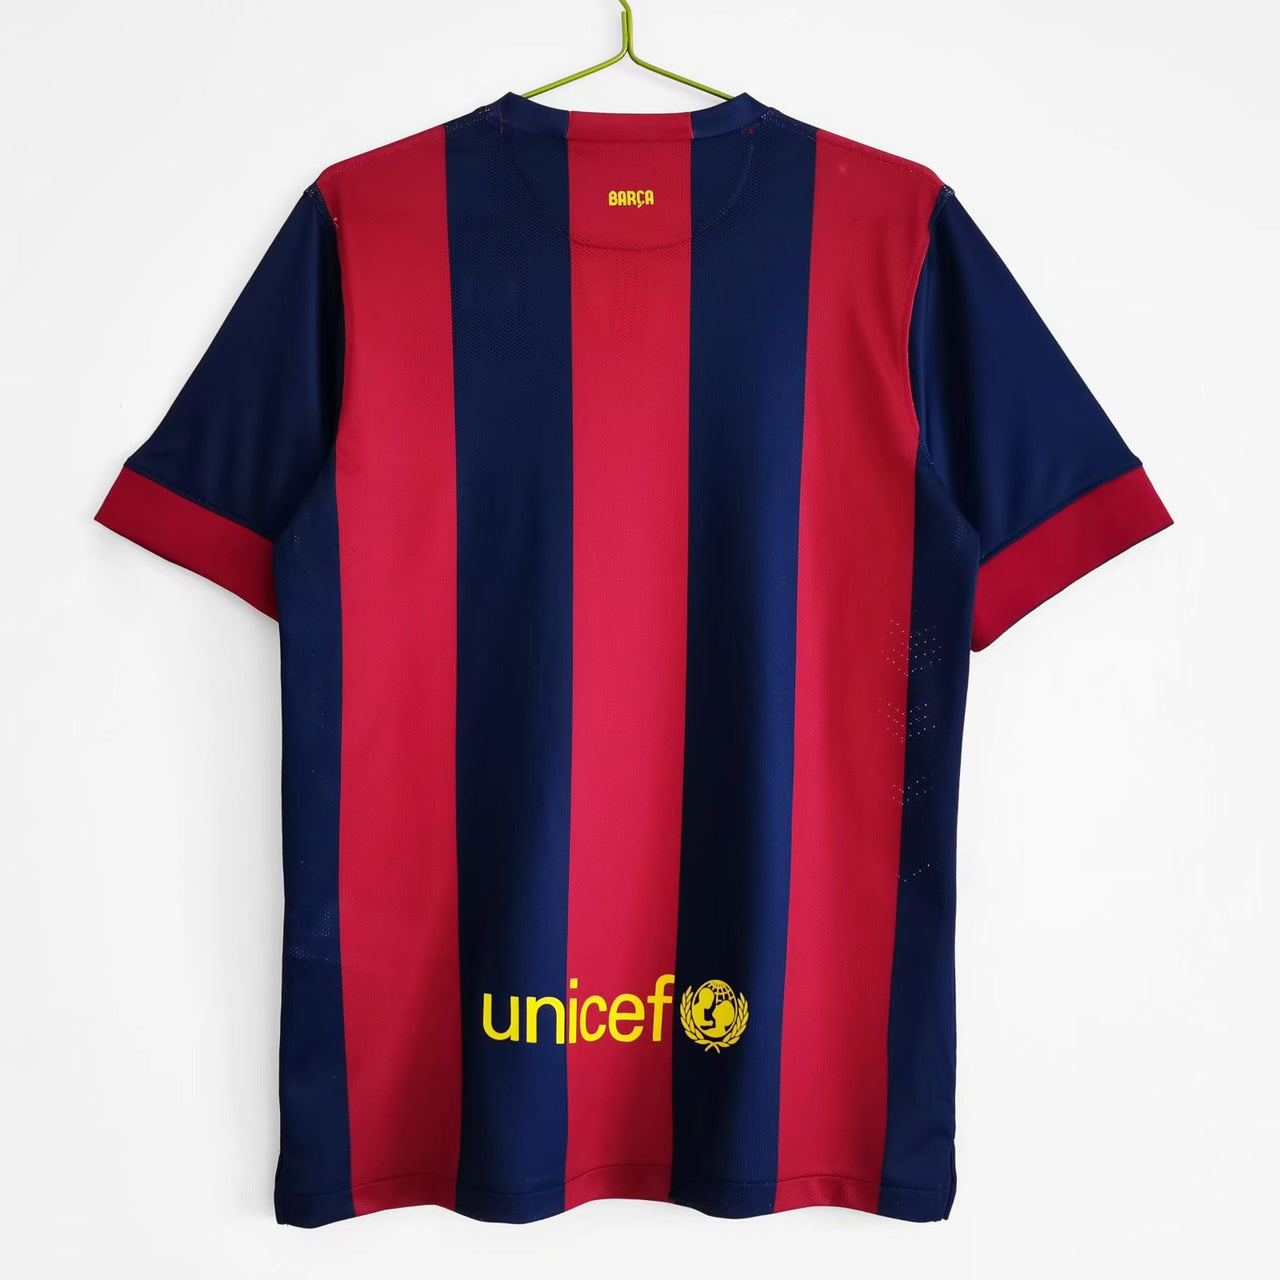 Barcelona 2014/2015 Home Retro football short slave jersey